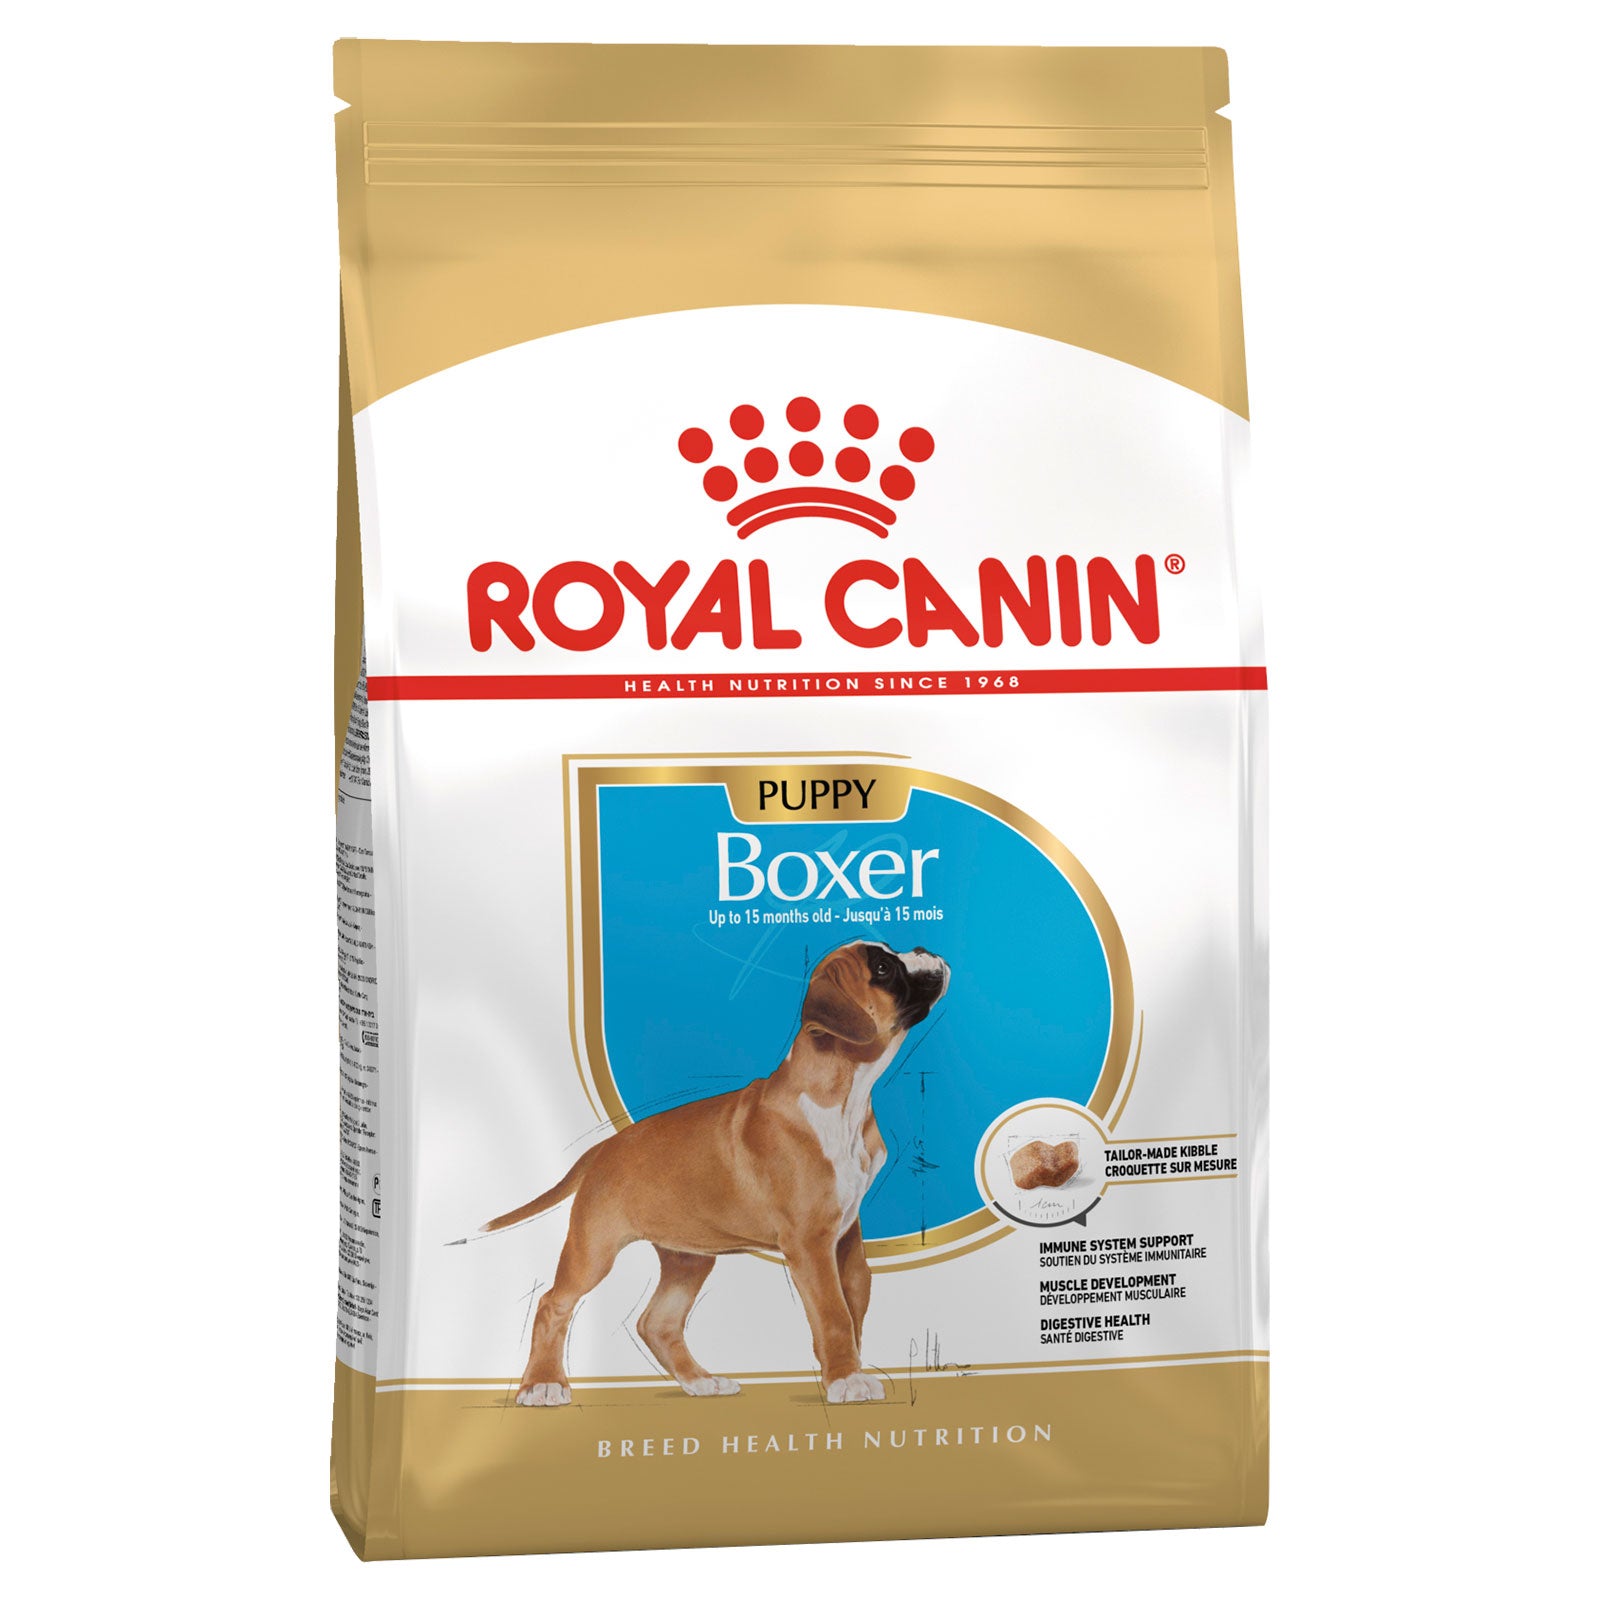 Royal Canin Dog Food Puppy Boxer